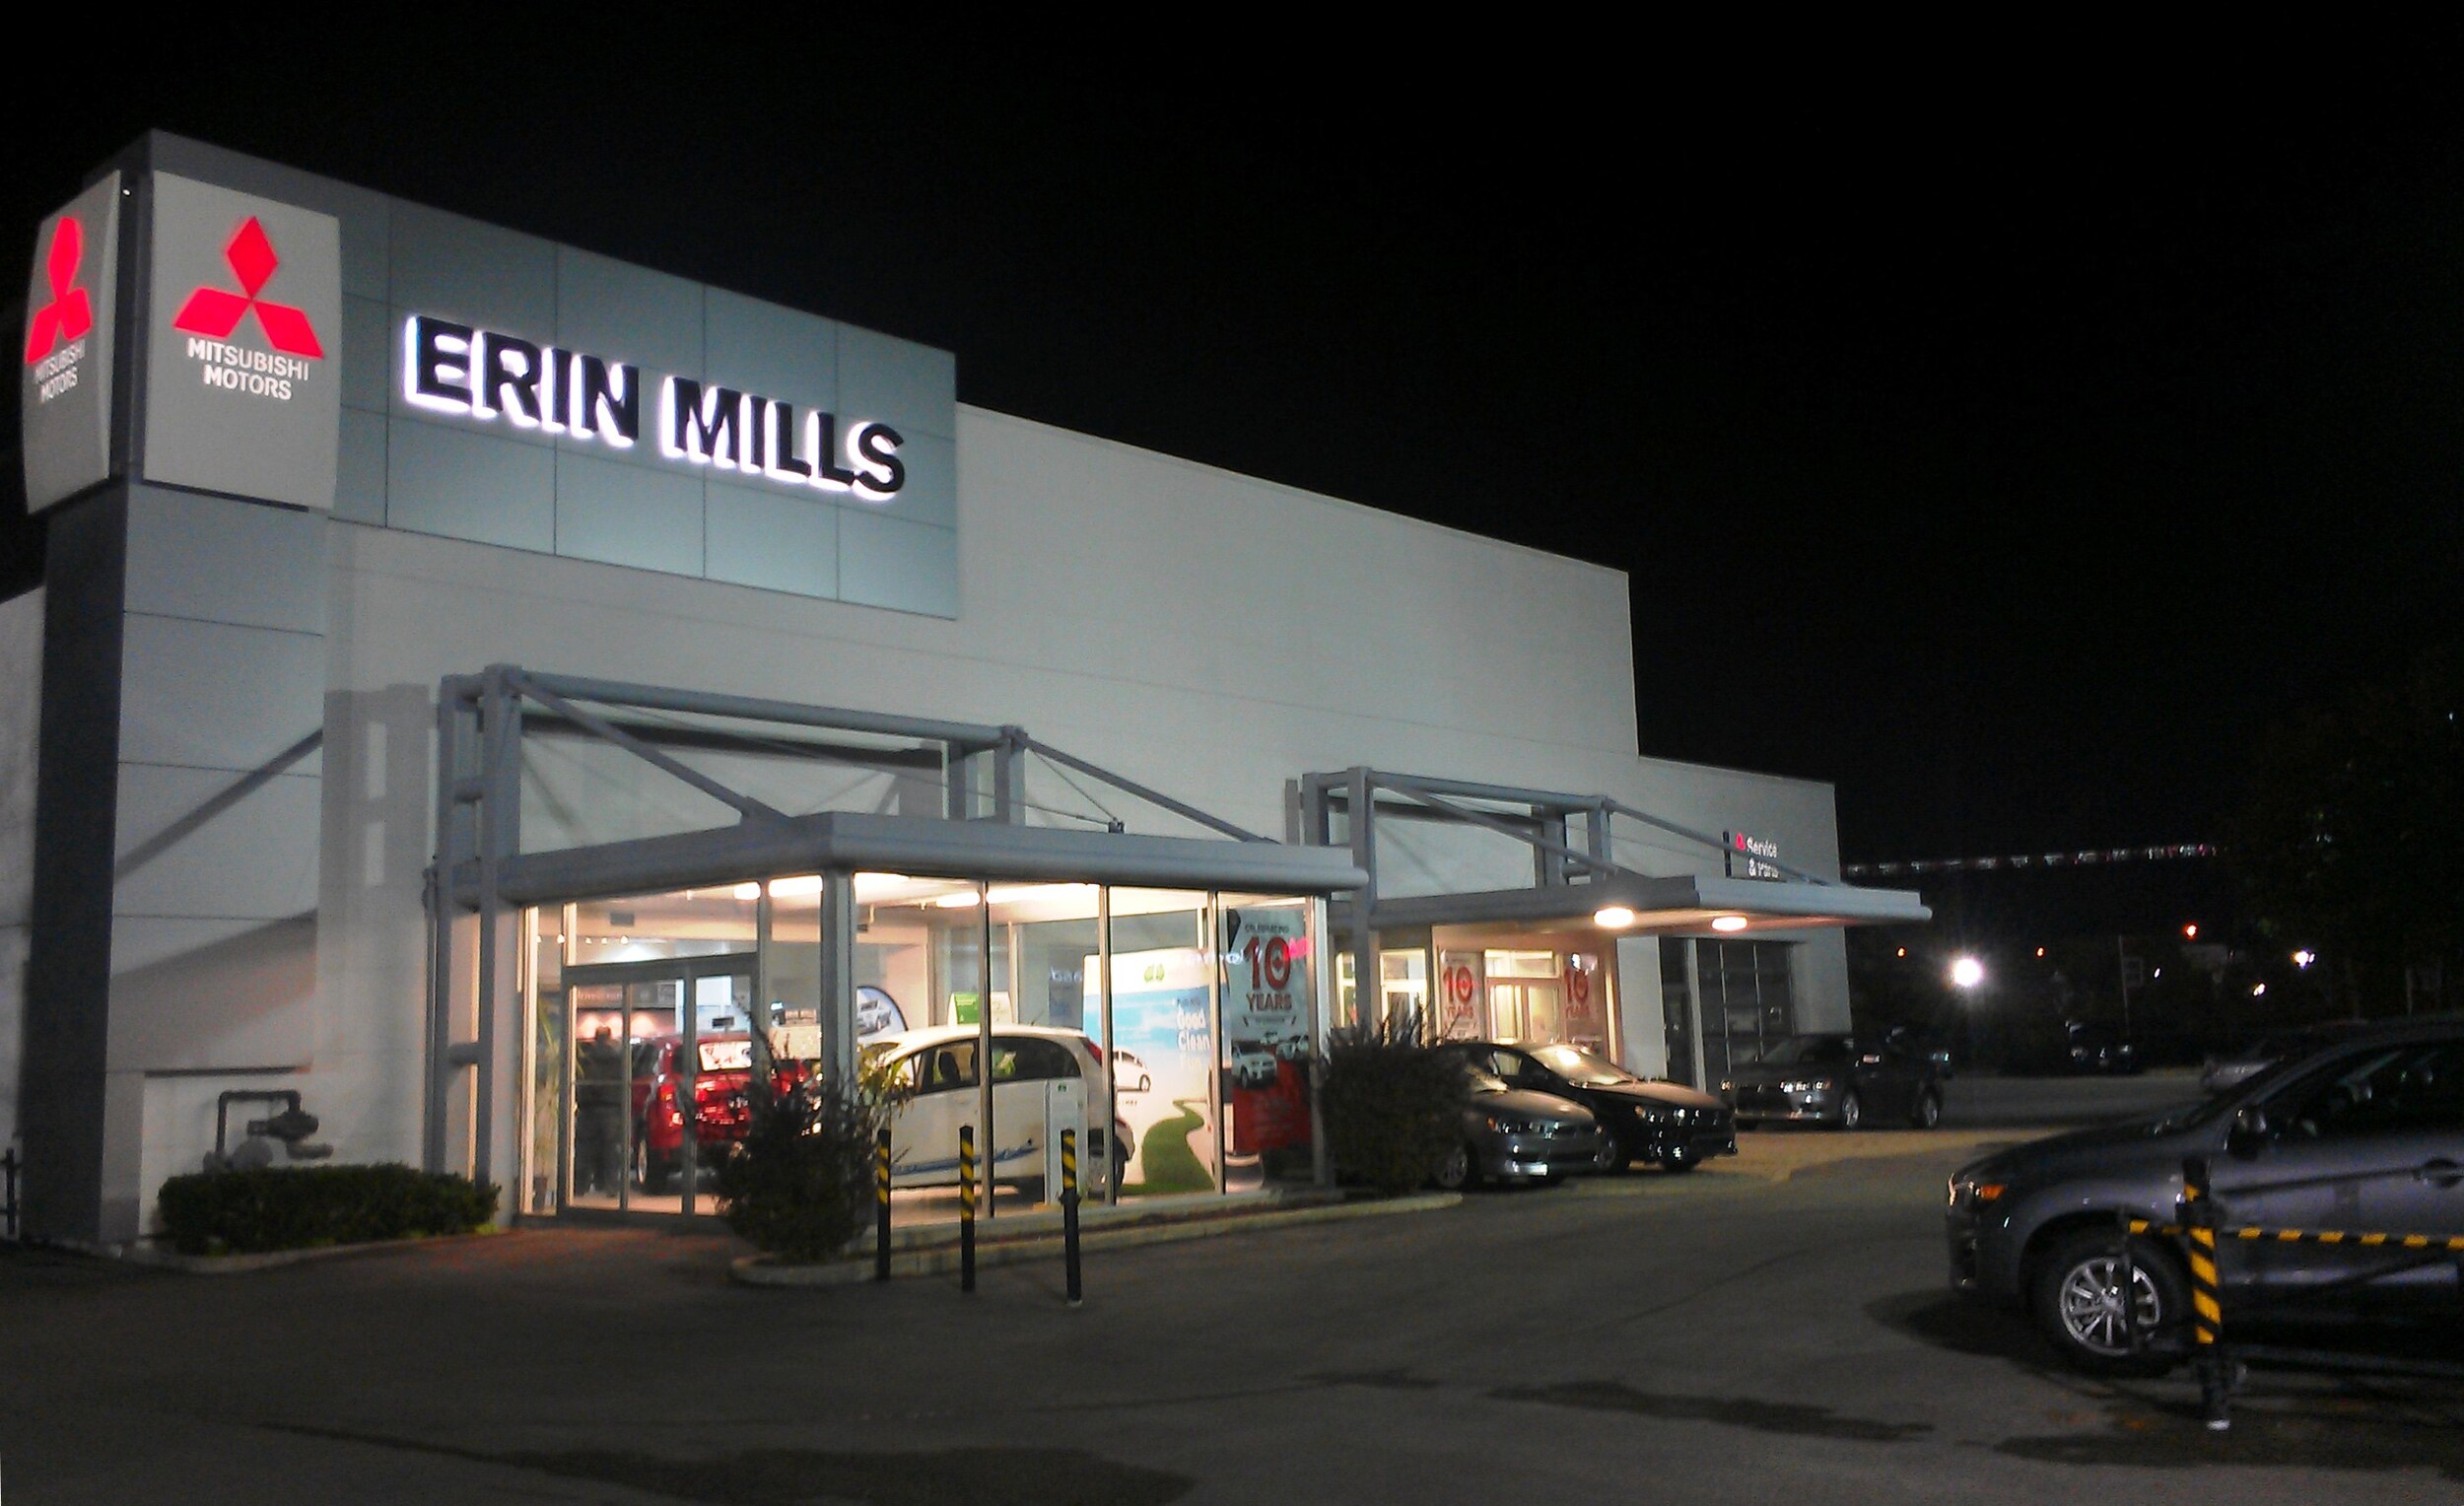 Erin mills auto mall ford #5